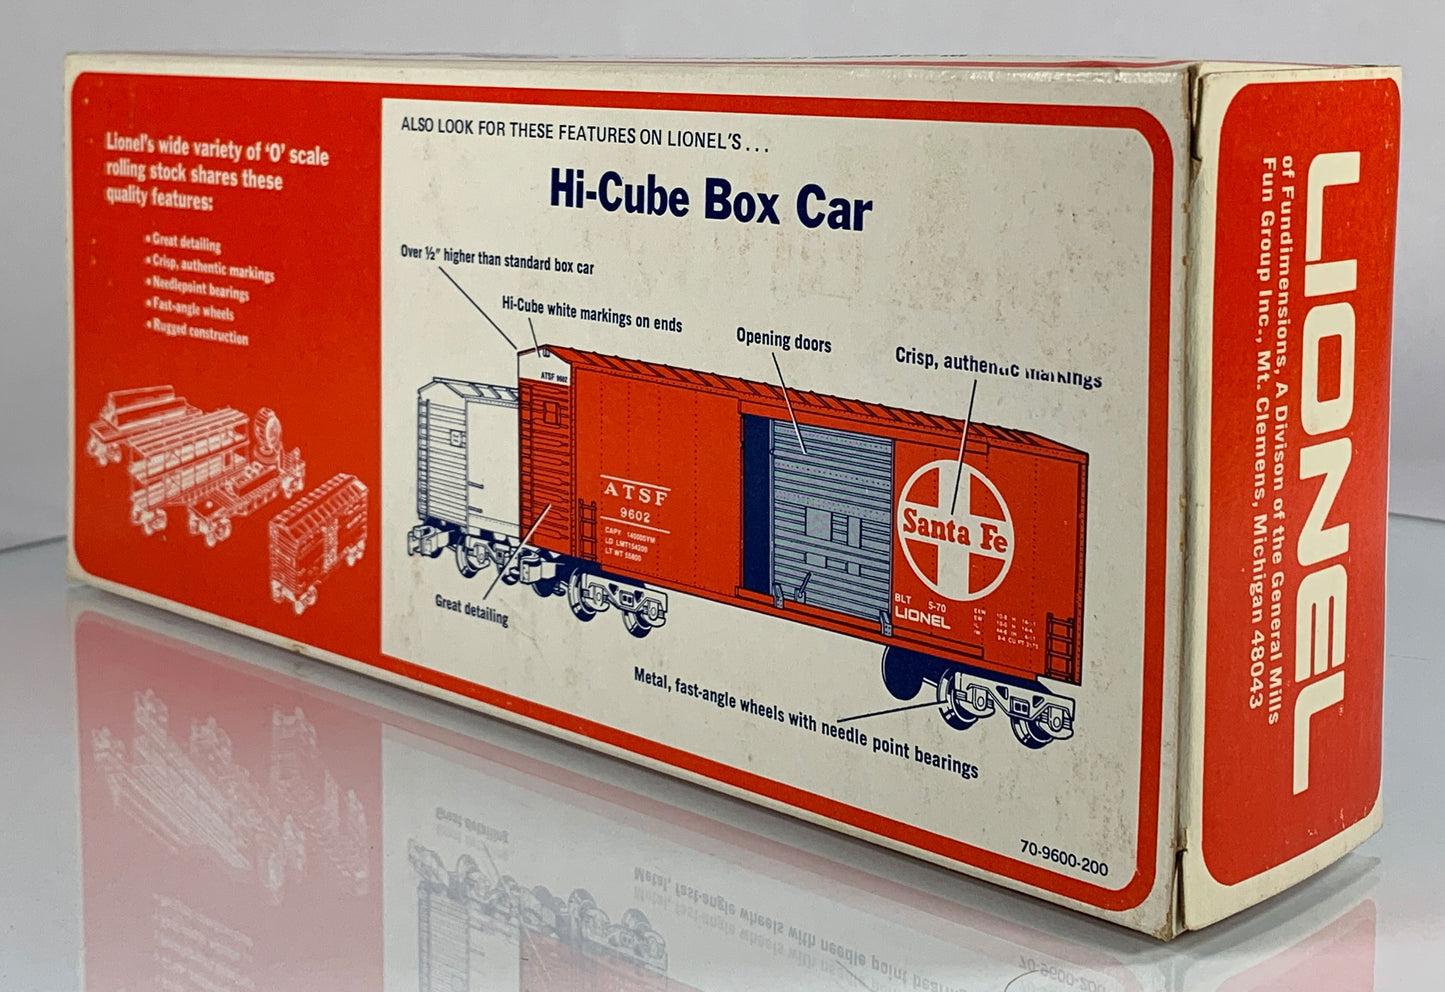 LIONEL • O GAUGE • 1976 Penn Central Hi-Cube Boxcar 6-9603 • EX COND • LNOS